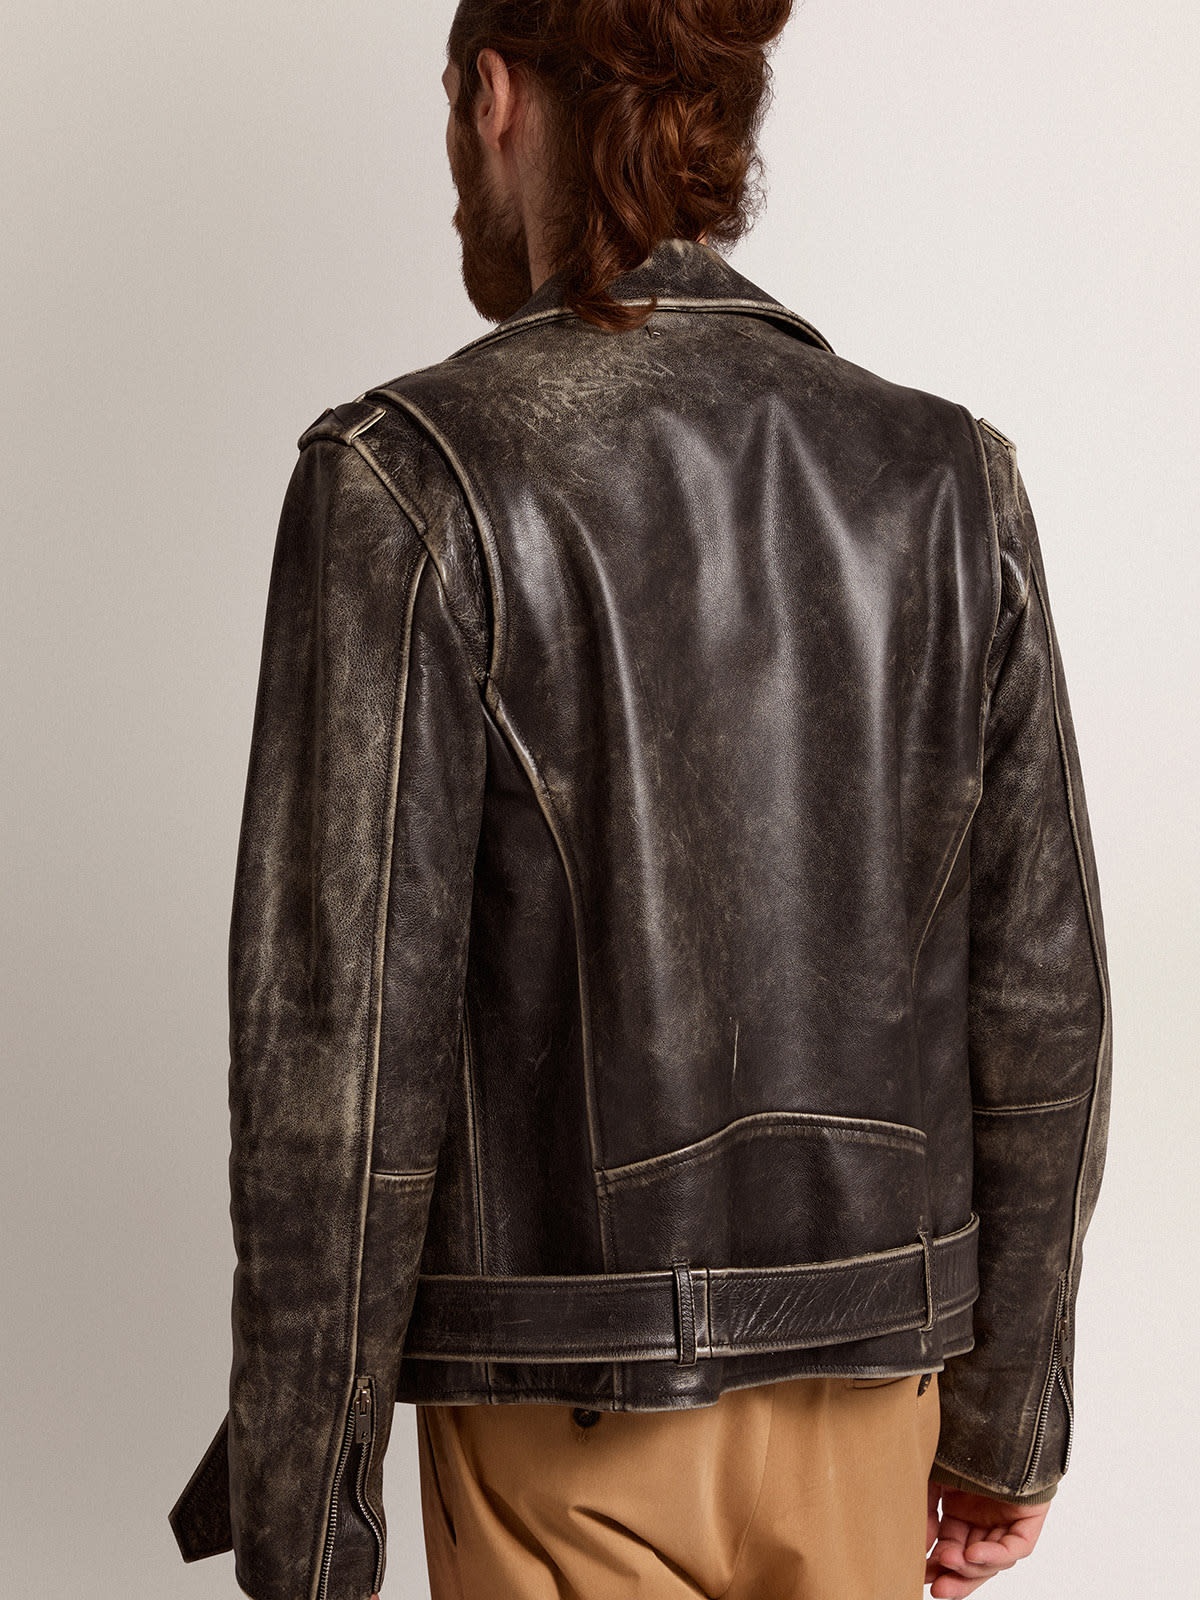 Men's biker jacket in distressed leather - 4